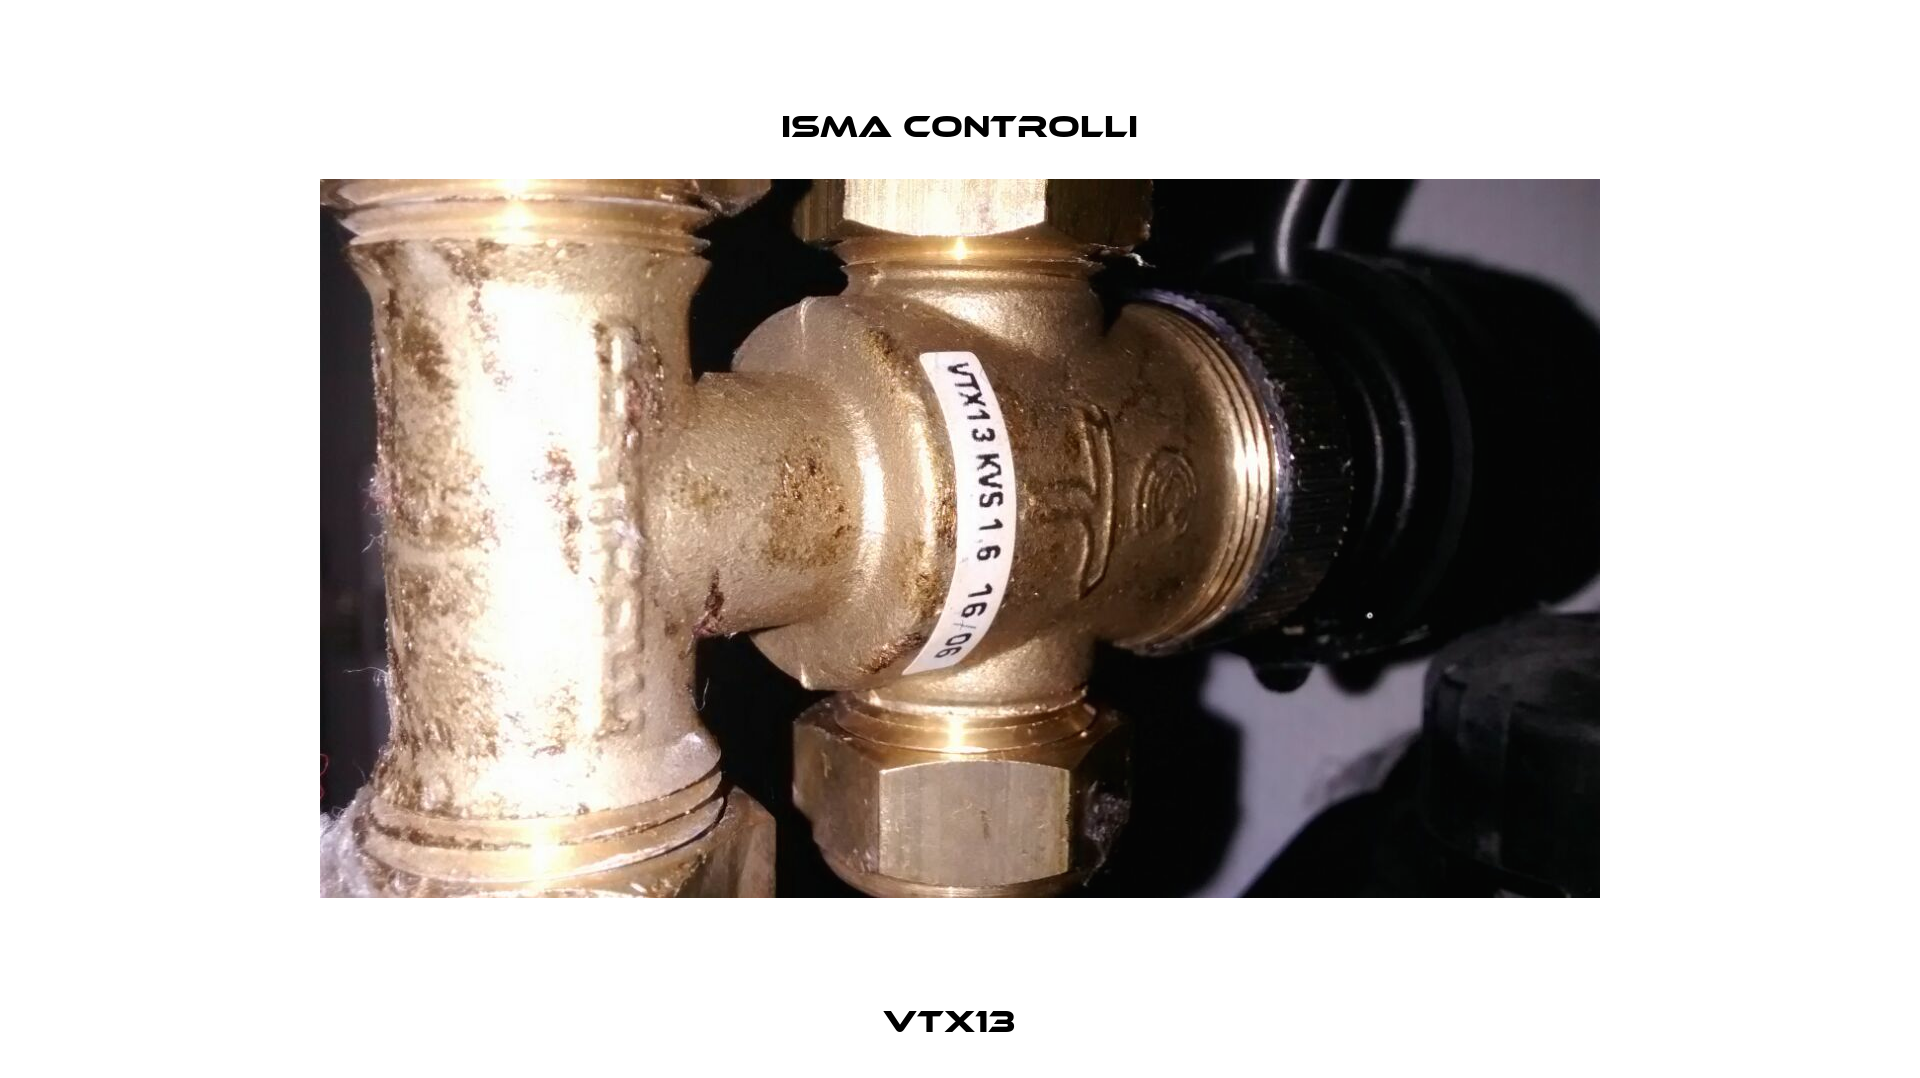 VTX13   iSMA CONTROLLI